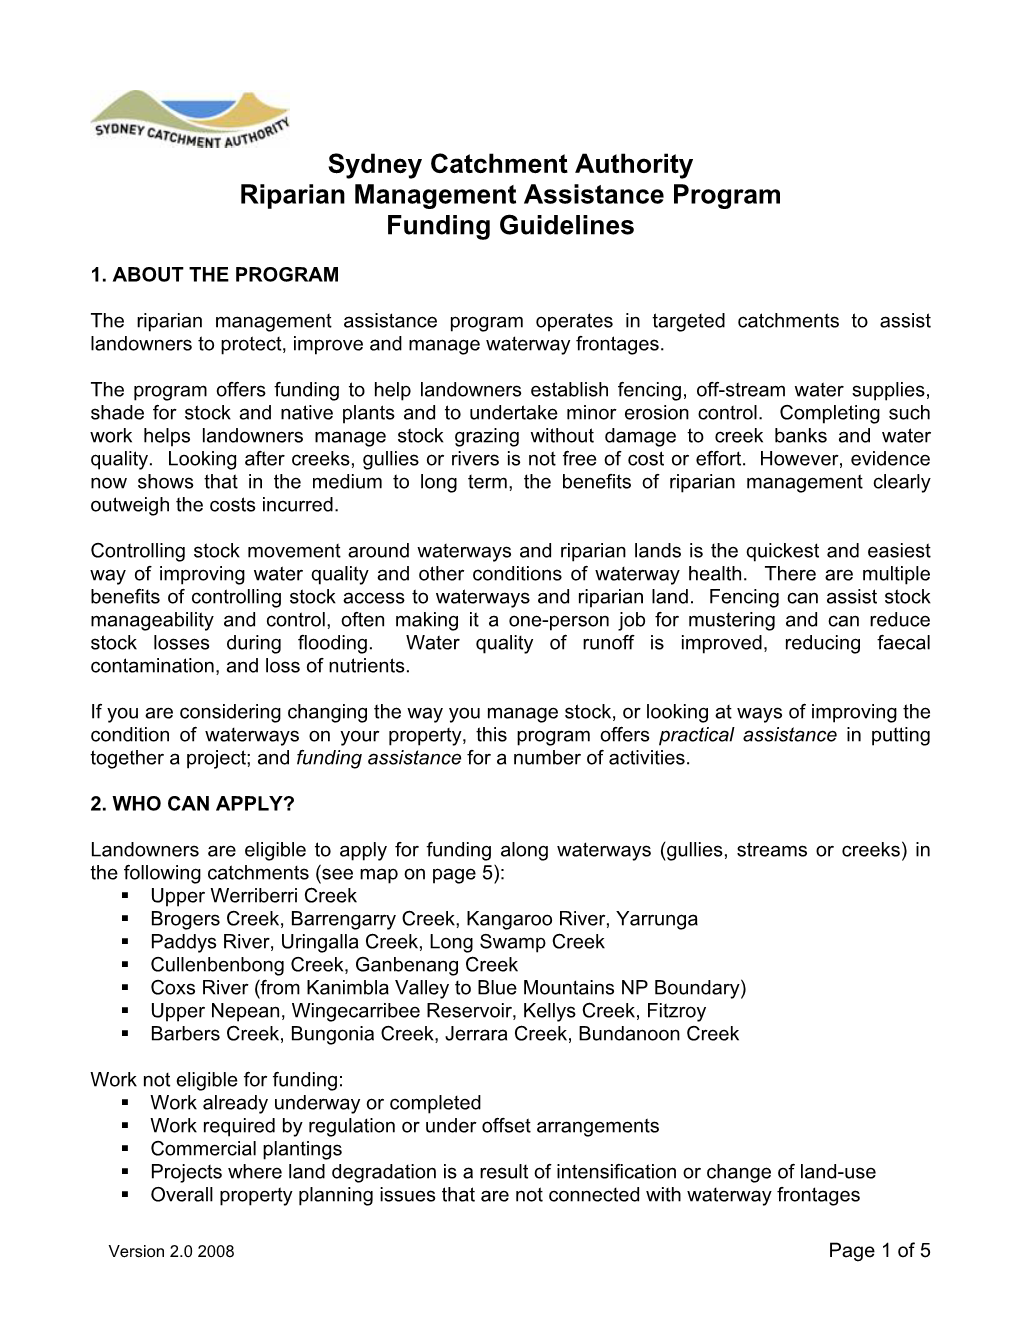 Sydney Catchment Authority Riparian Management Assistance Program Funding Guidelines